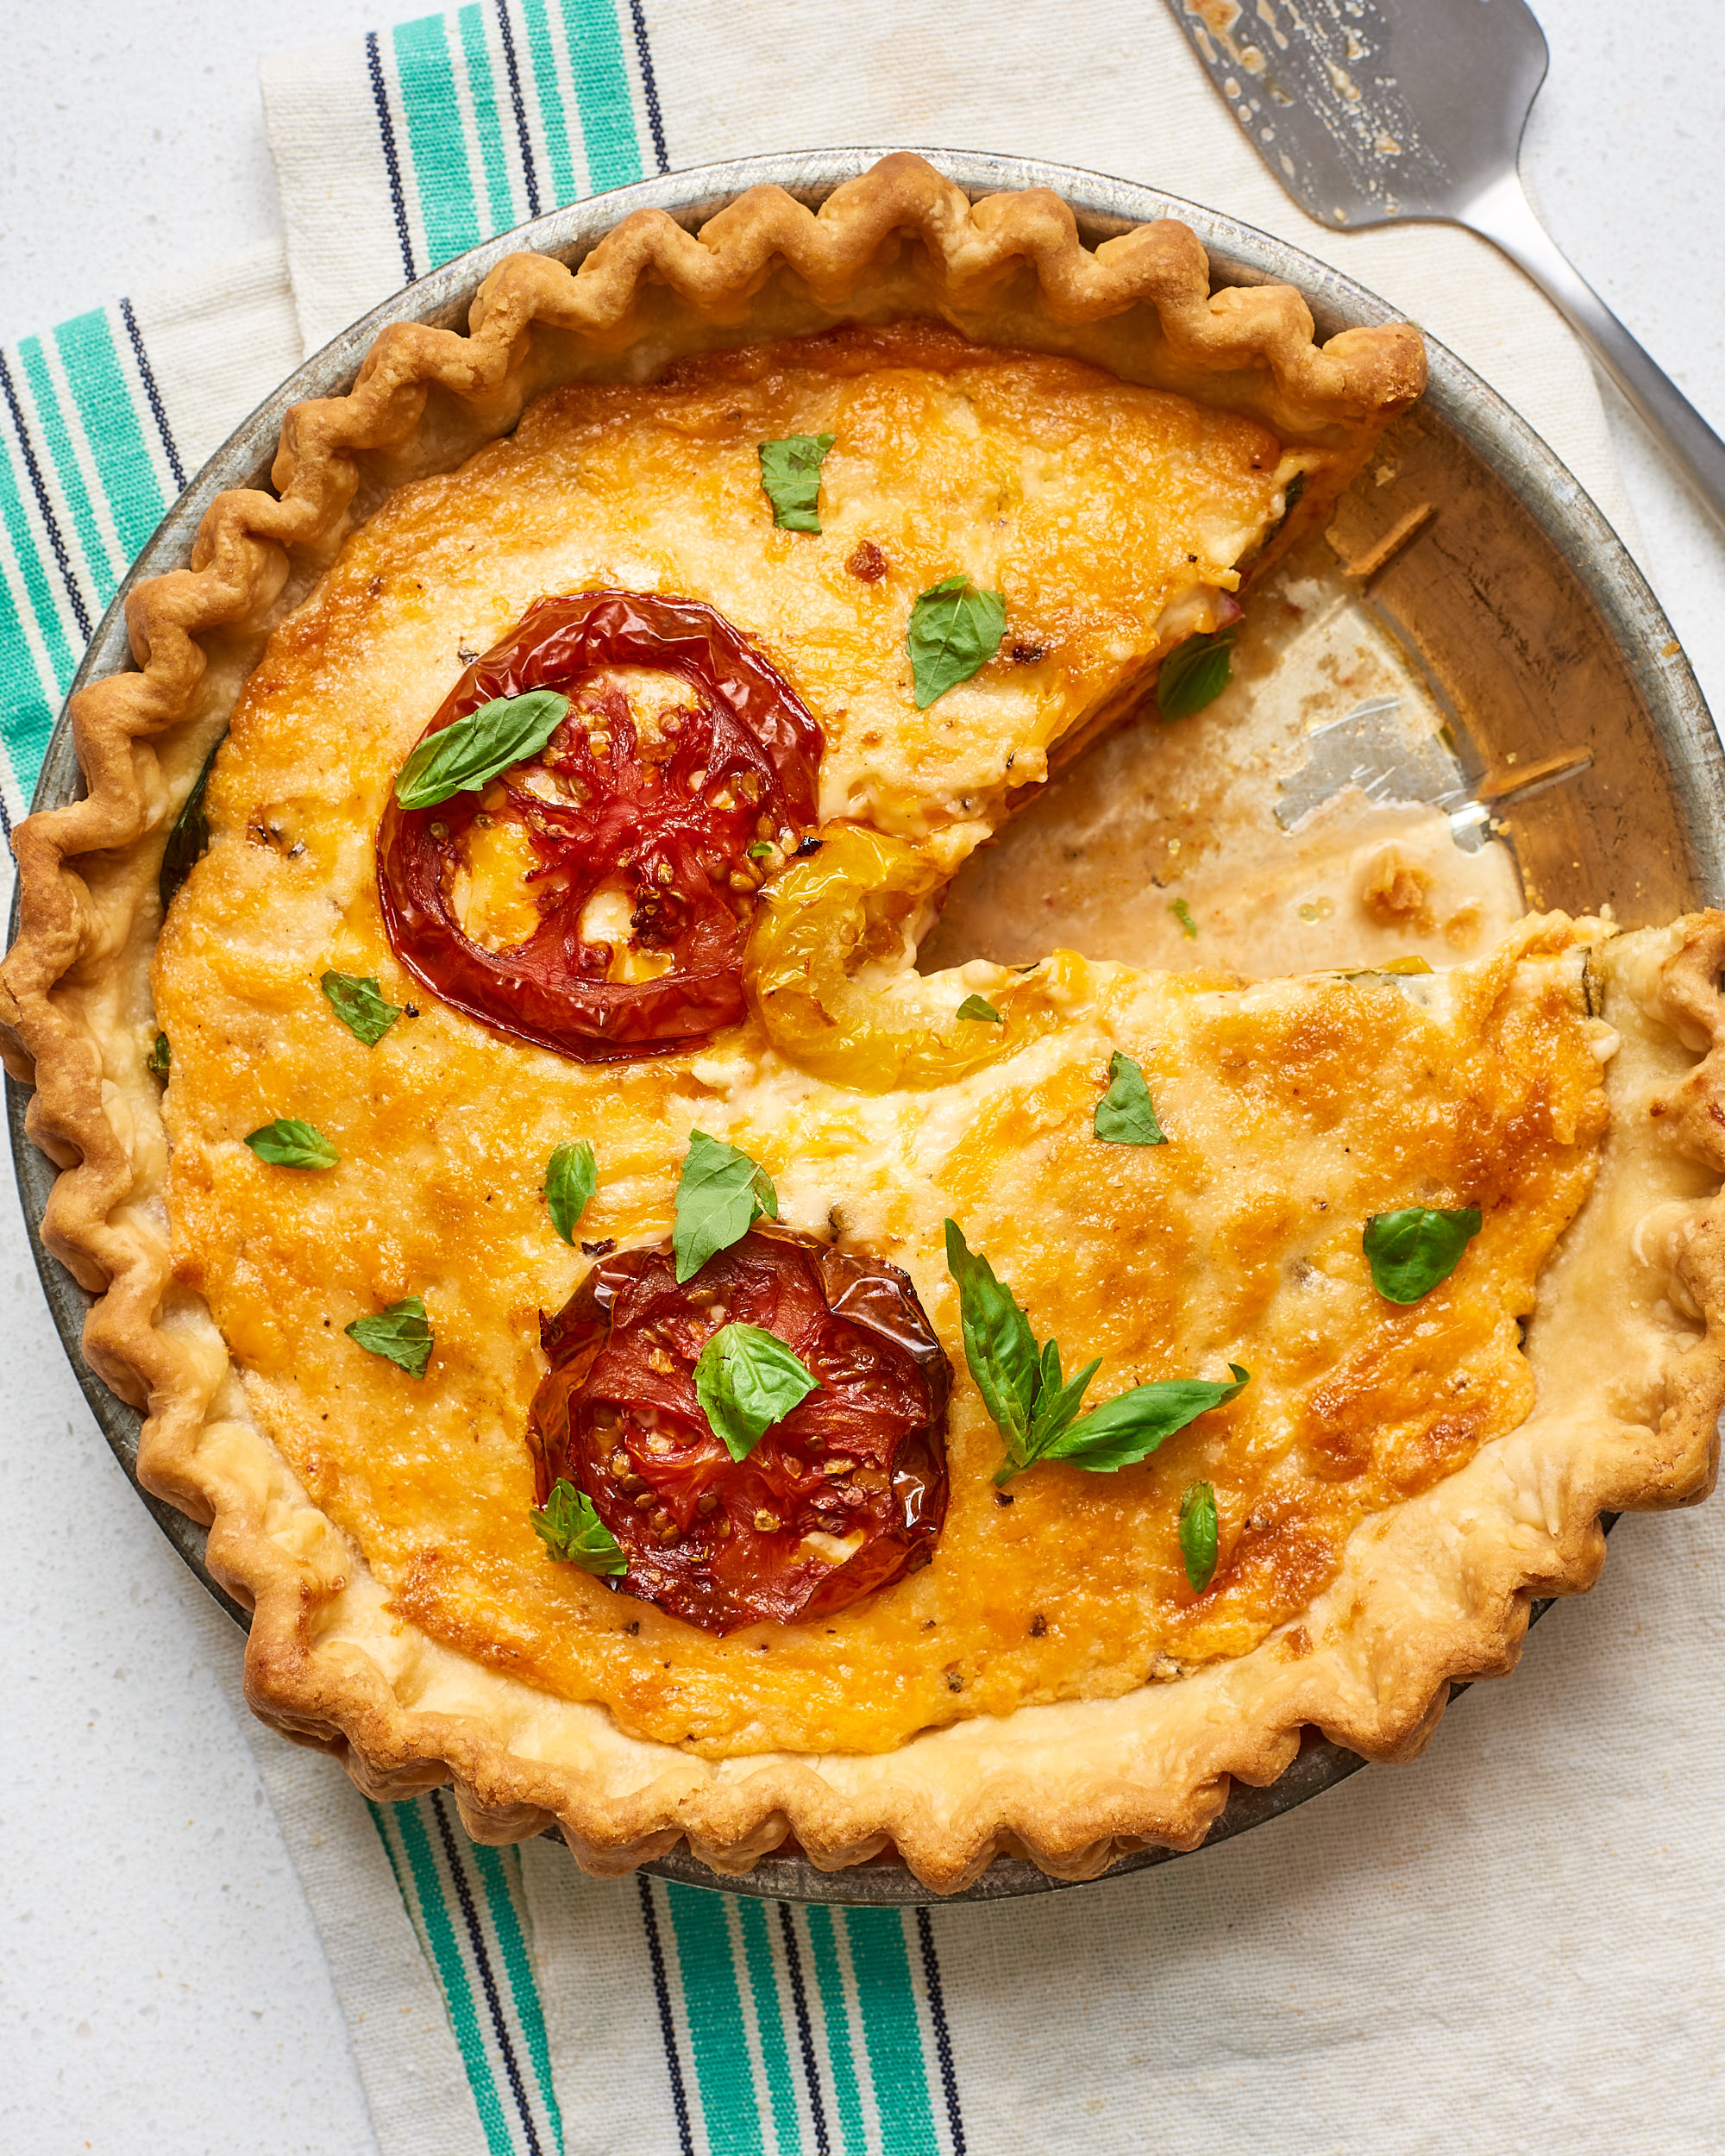 Heirloom Tomato Pie Recipe: How to Make It